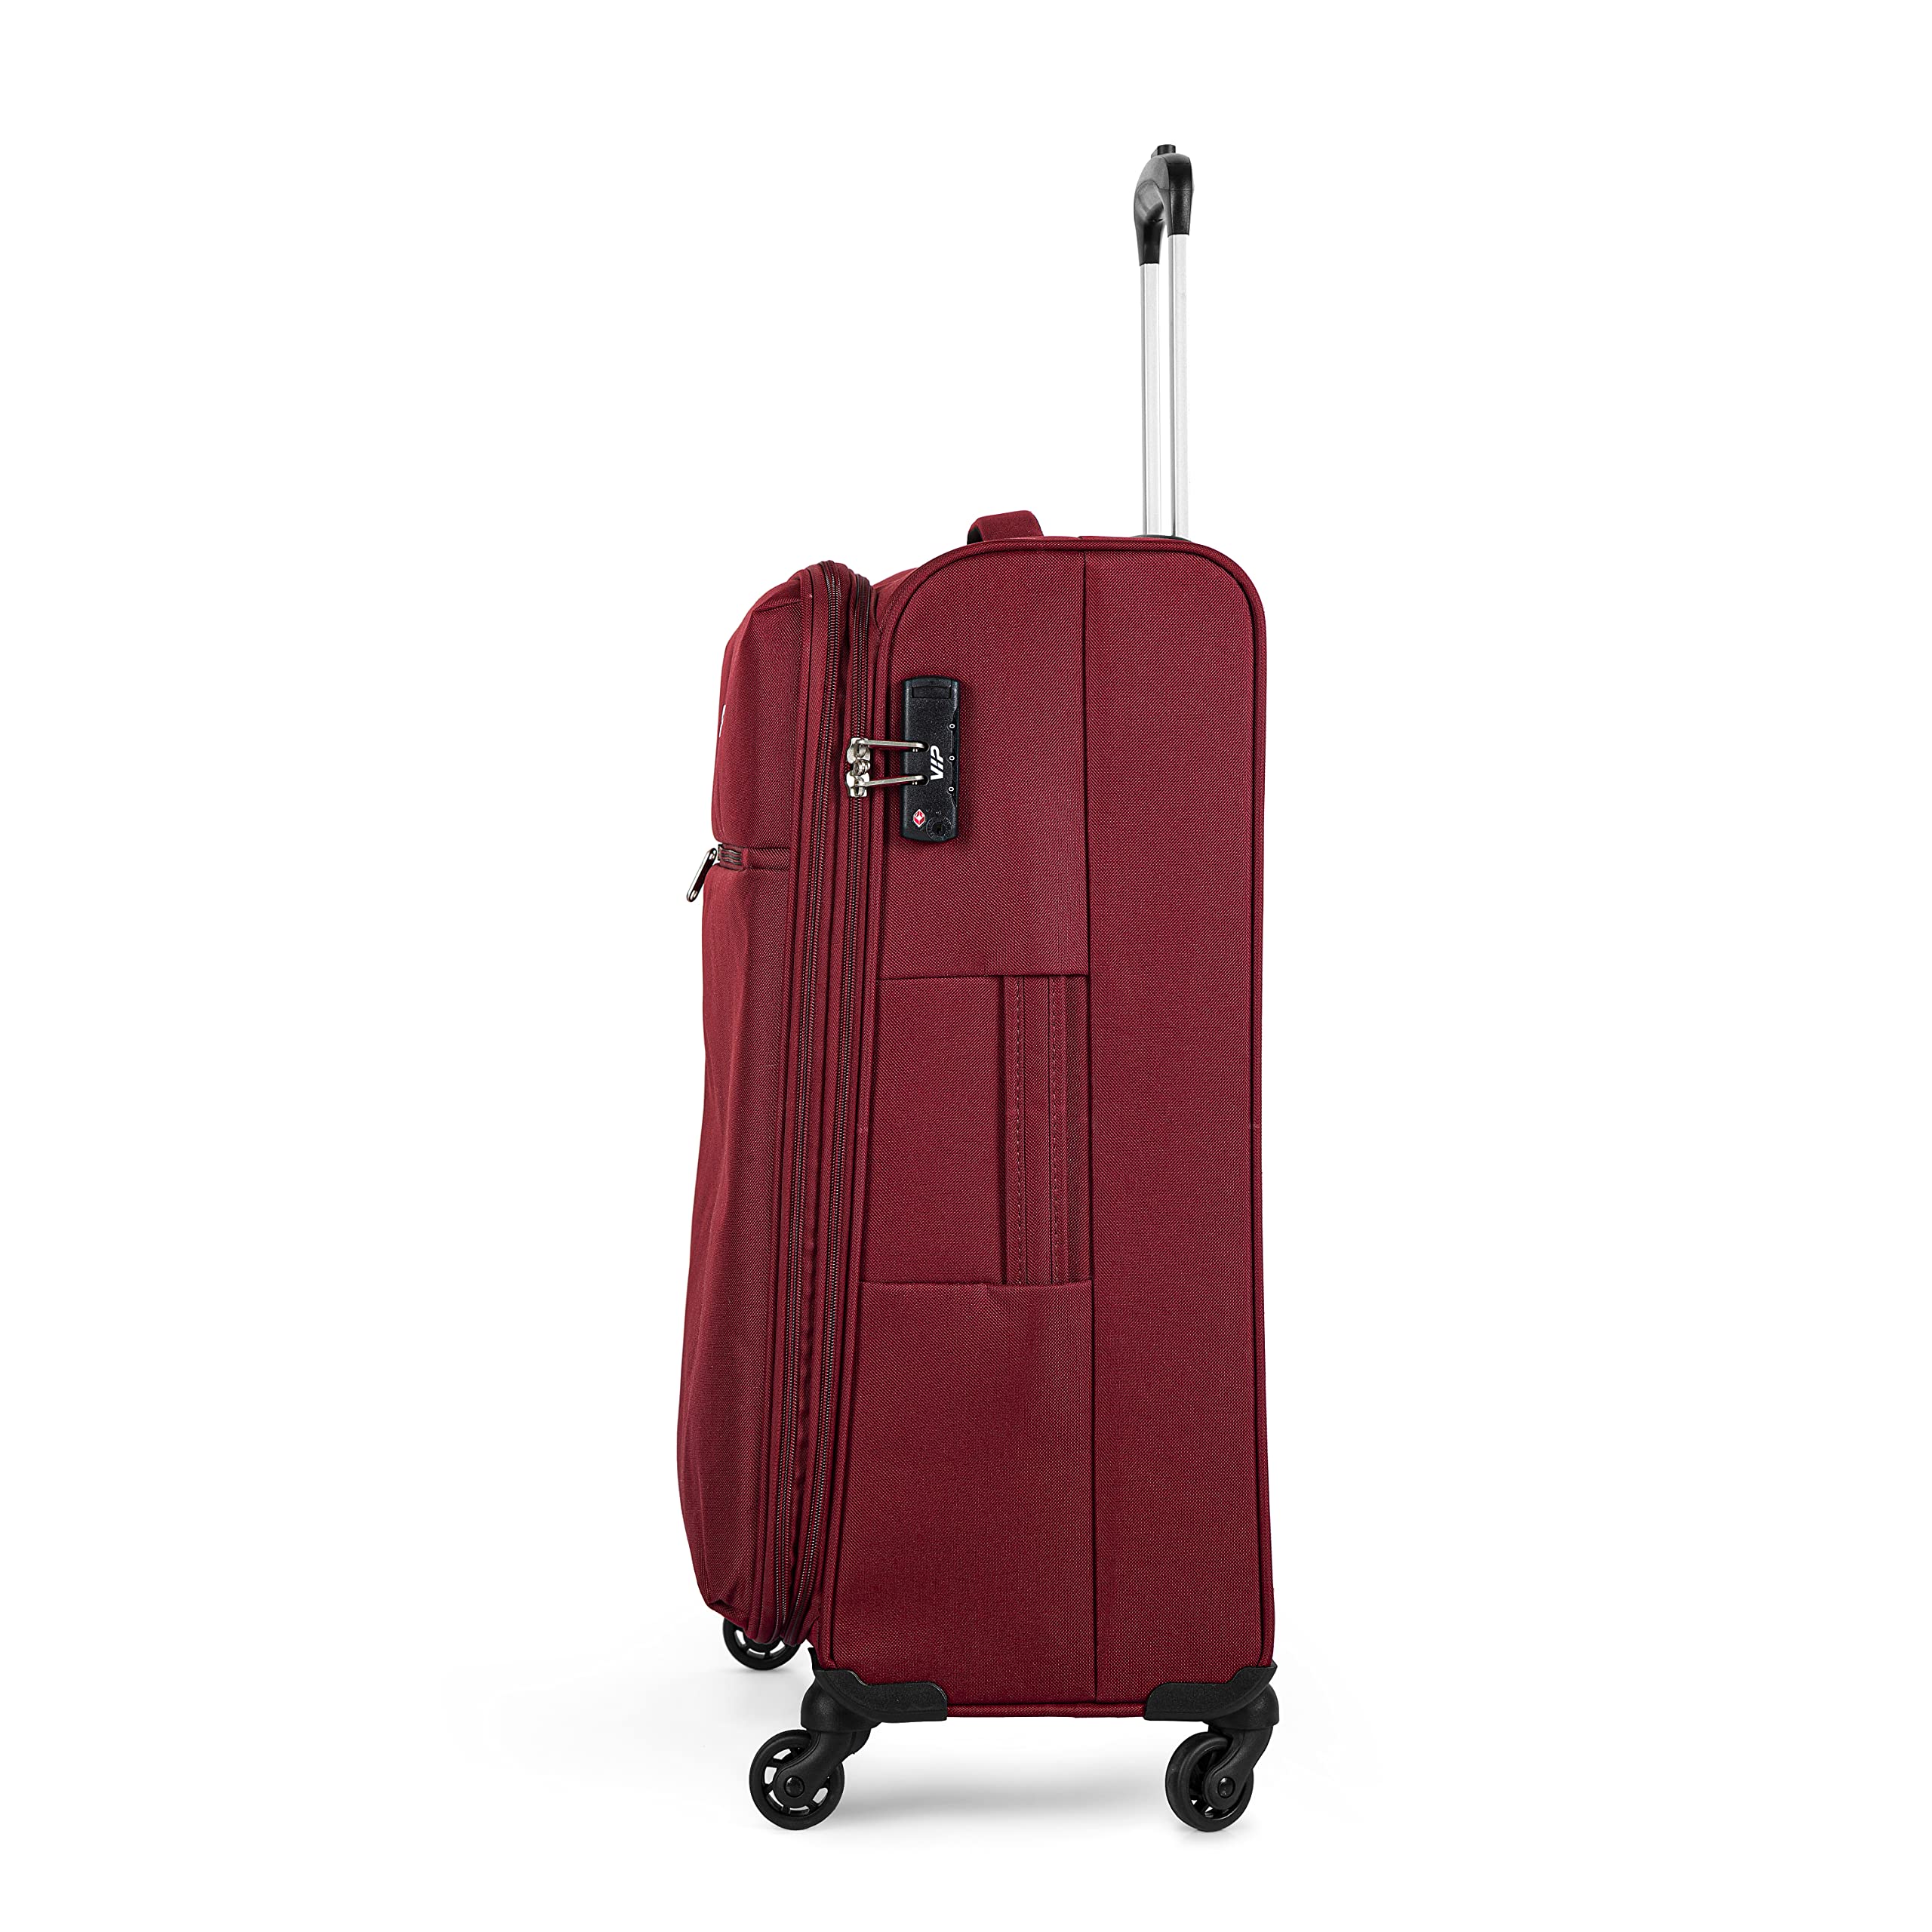 VIP Tivoli 4 Wheel Expandable Cabin Soft Luggage Trolley Bag شنطة امتعة لينة مزودة بـ4 عجلات وقابلة للتوسيع من في اي بي تيفولي